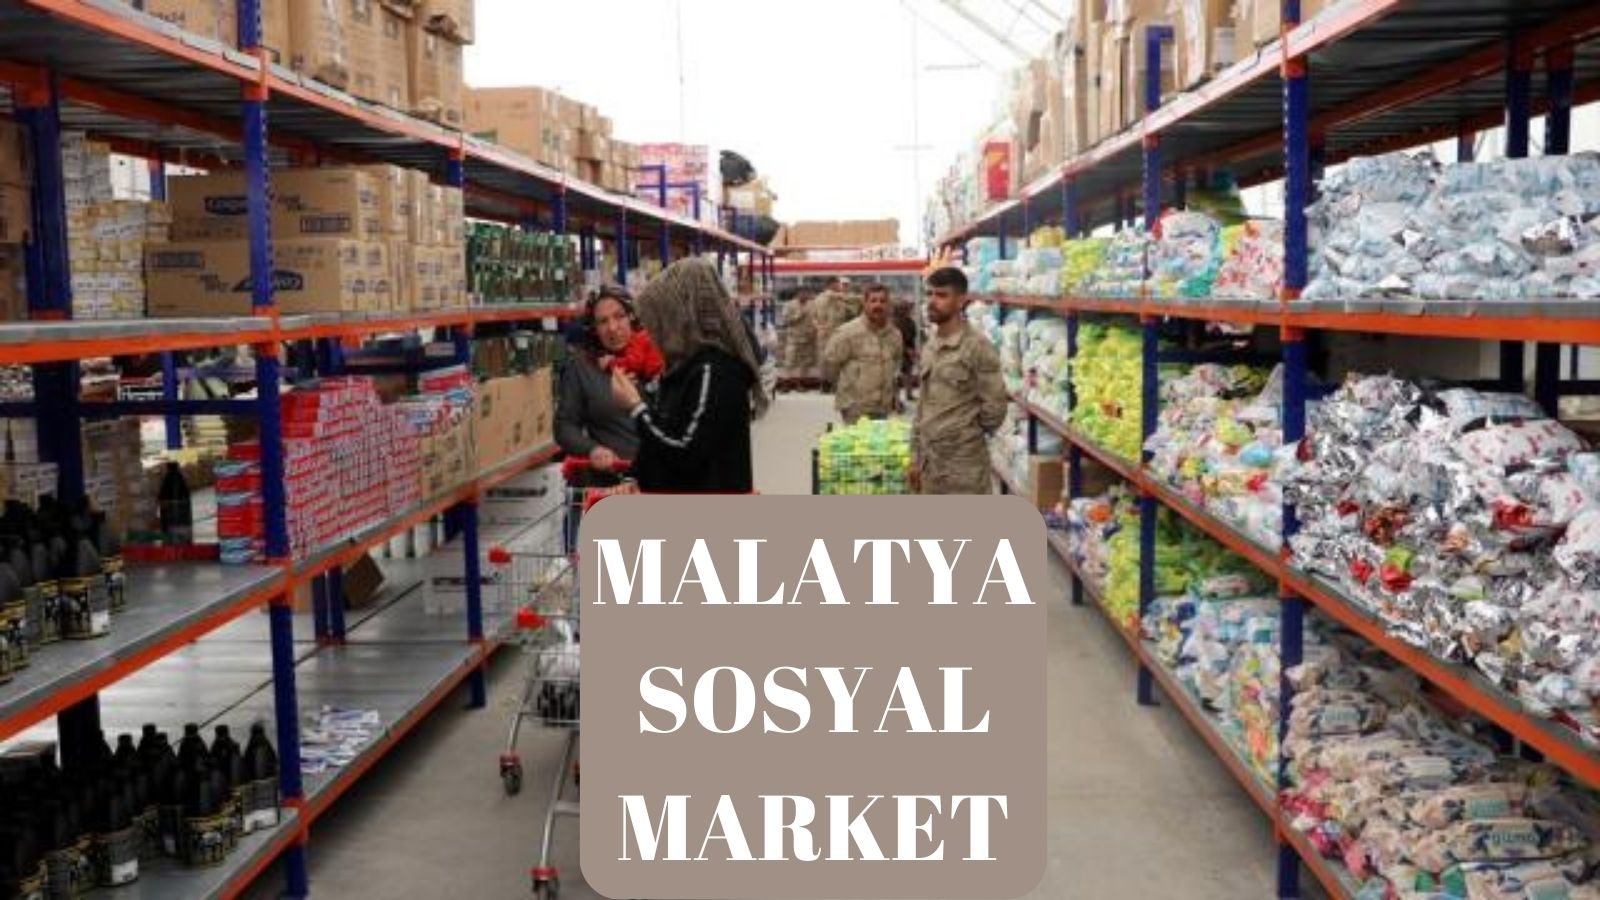 Malatya sosyal market